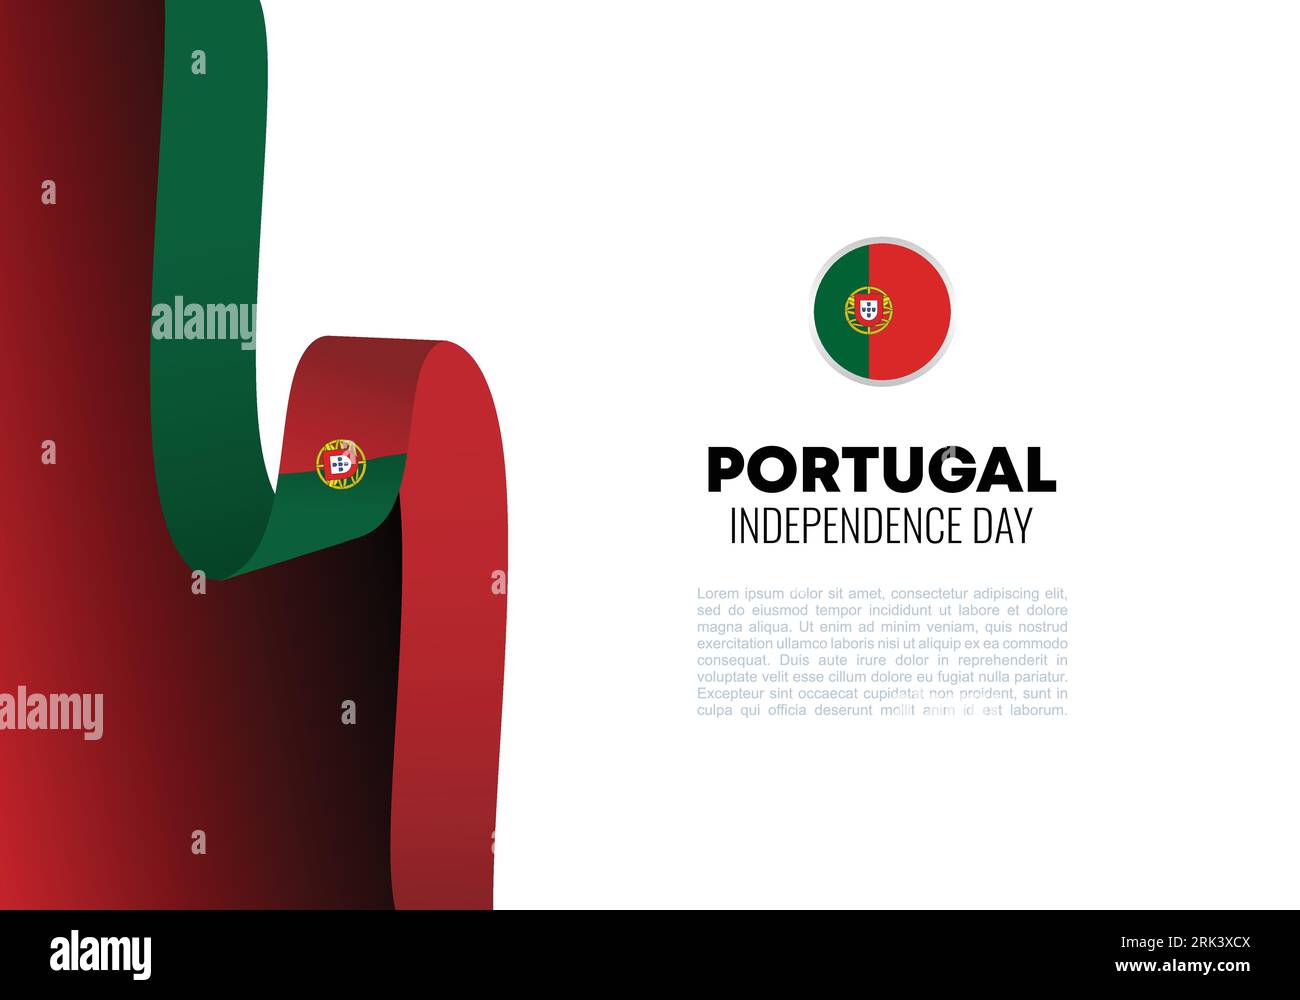 Portugal independence day background banner poster for national celebration on December 1 st. Stock Vector